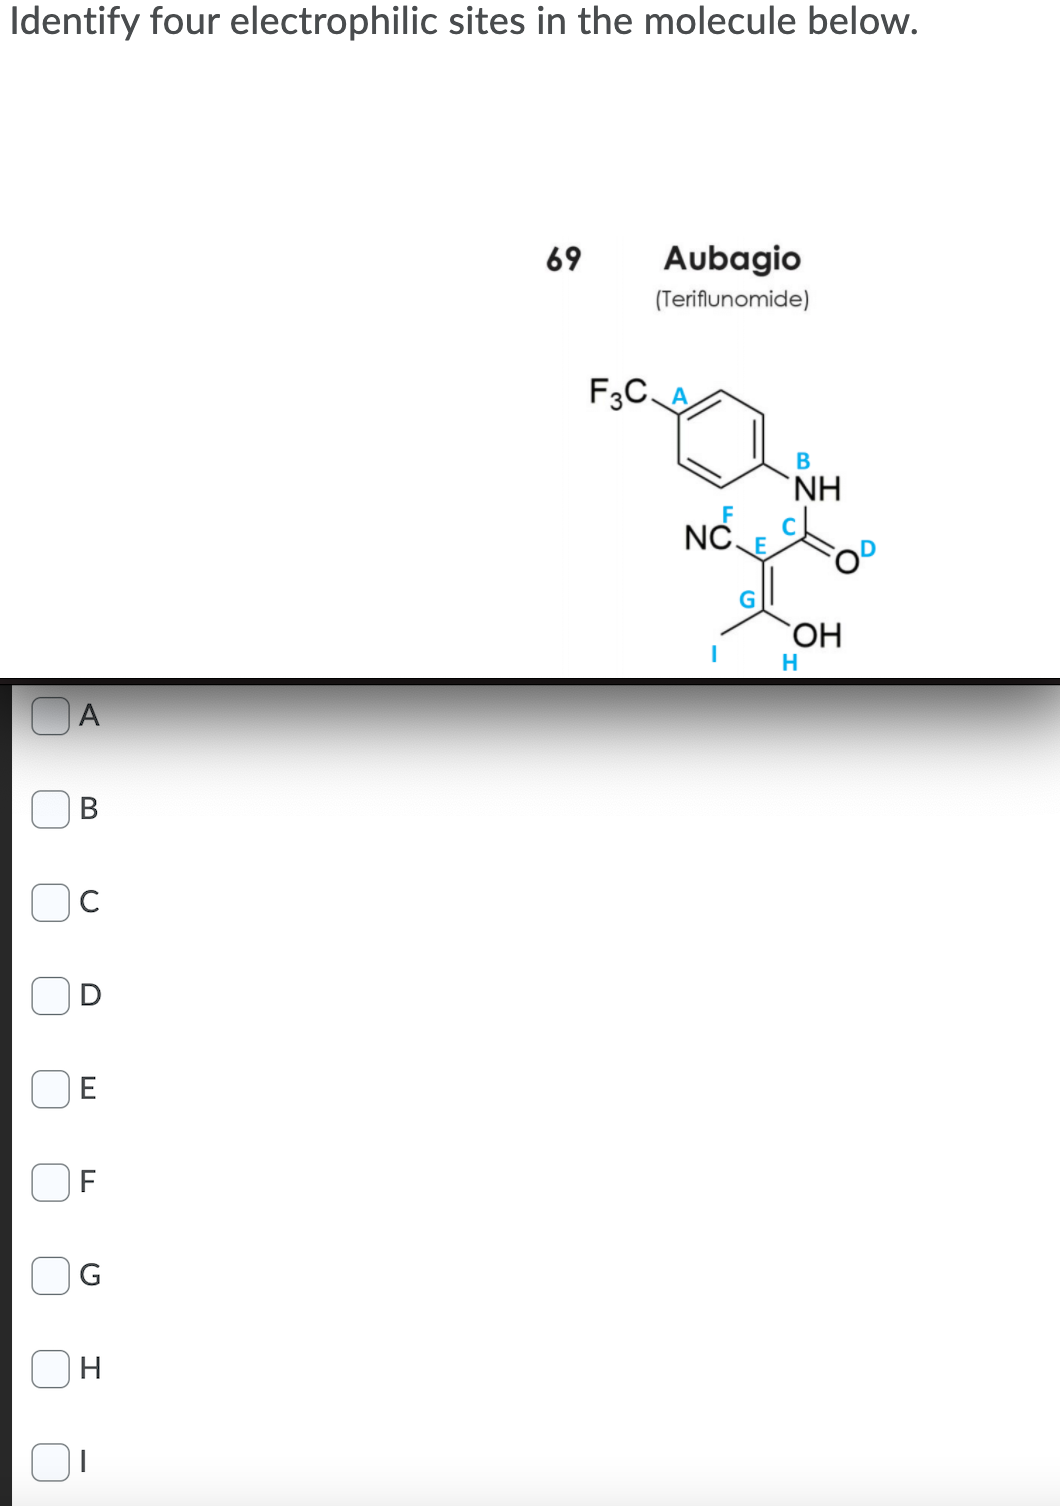 Identify four electrophilic sites in the molecule below.
69
Aubagio
(Teriflunomide)
F3C.
В
`NH
NC.
`OH
H
A
|C
